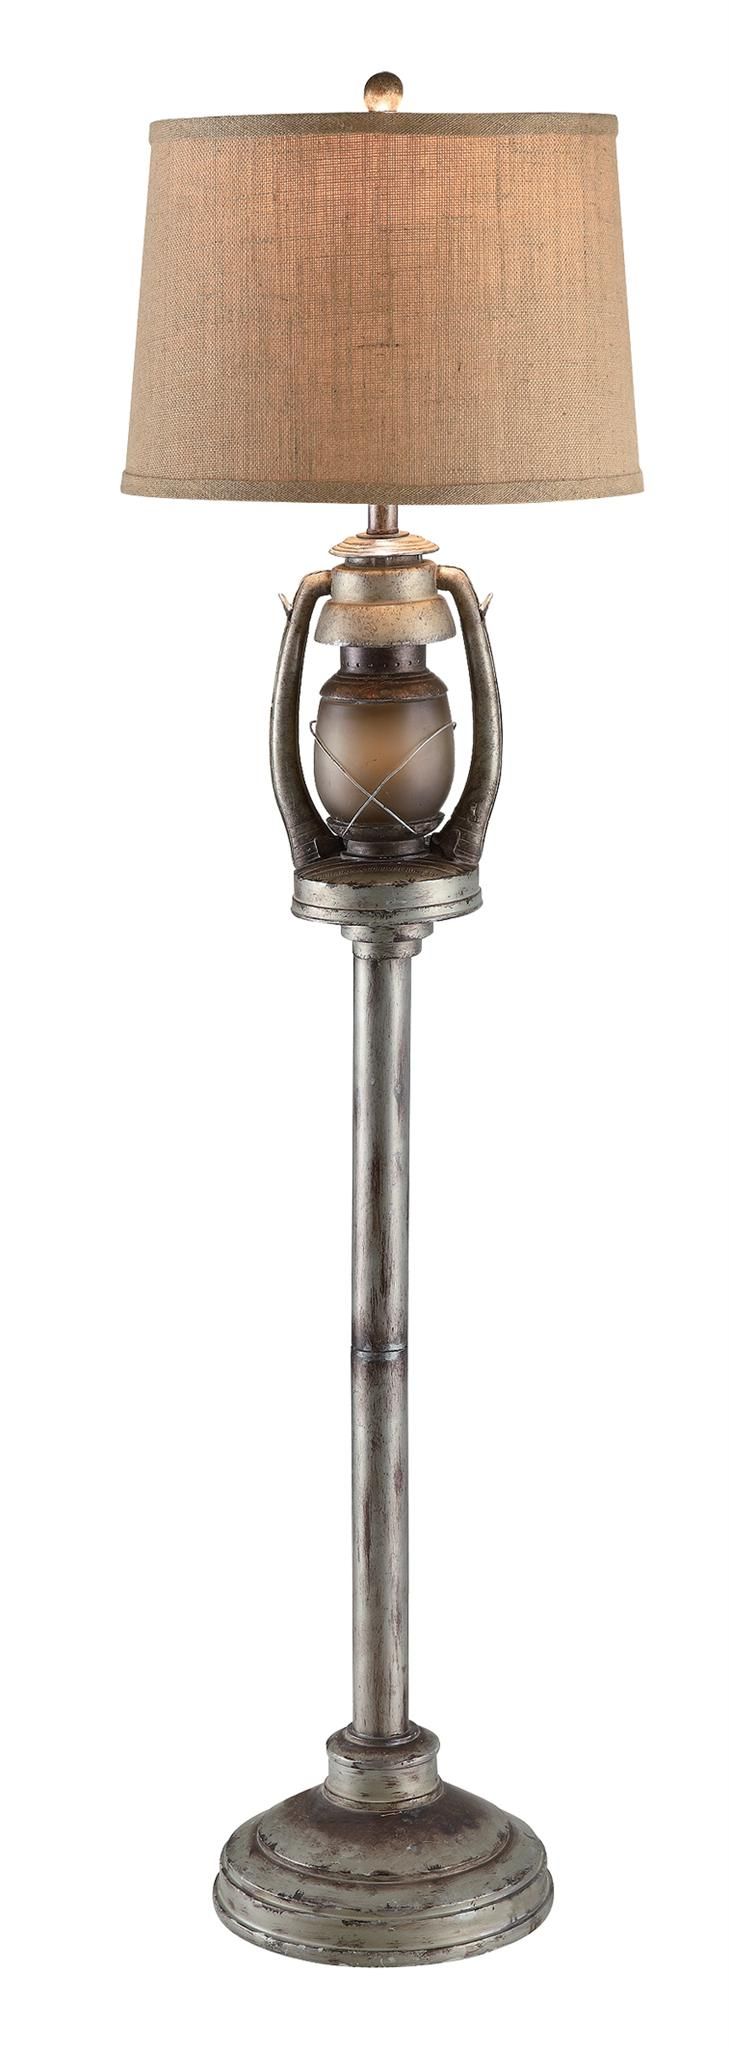 Oil Lantern 62 Inch Floor Lamp, Antique Lantern – Walmart Throughout 62 Inch Floor Lamps (View 8 of 15)